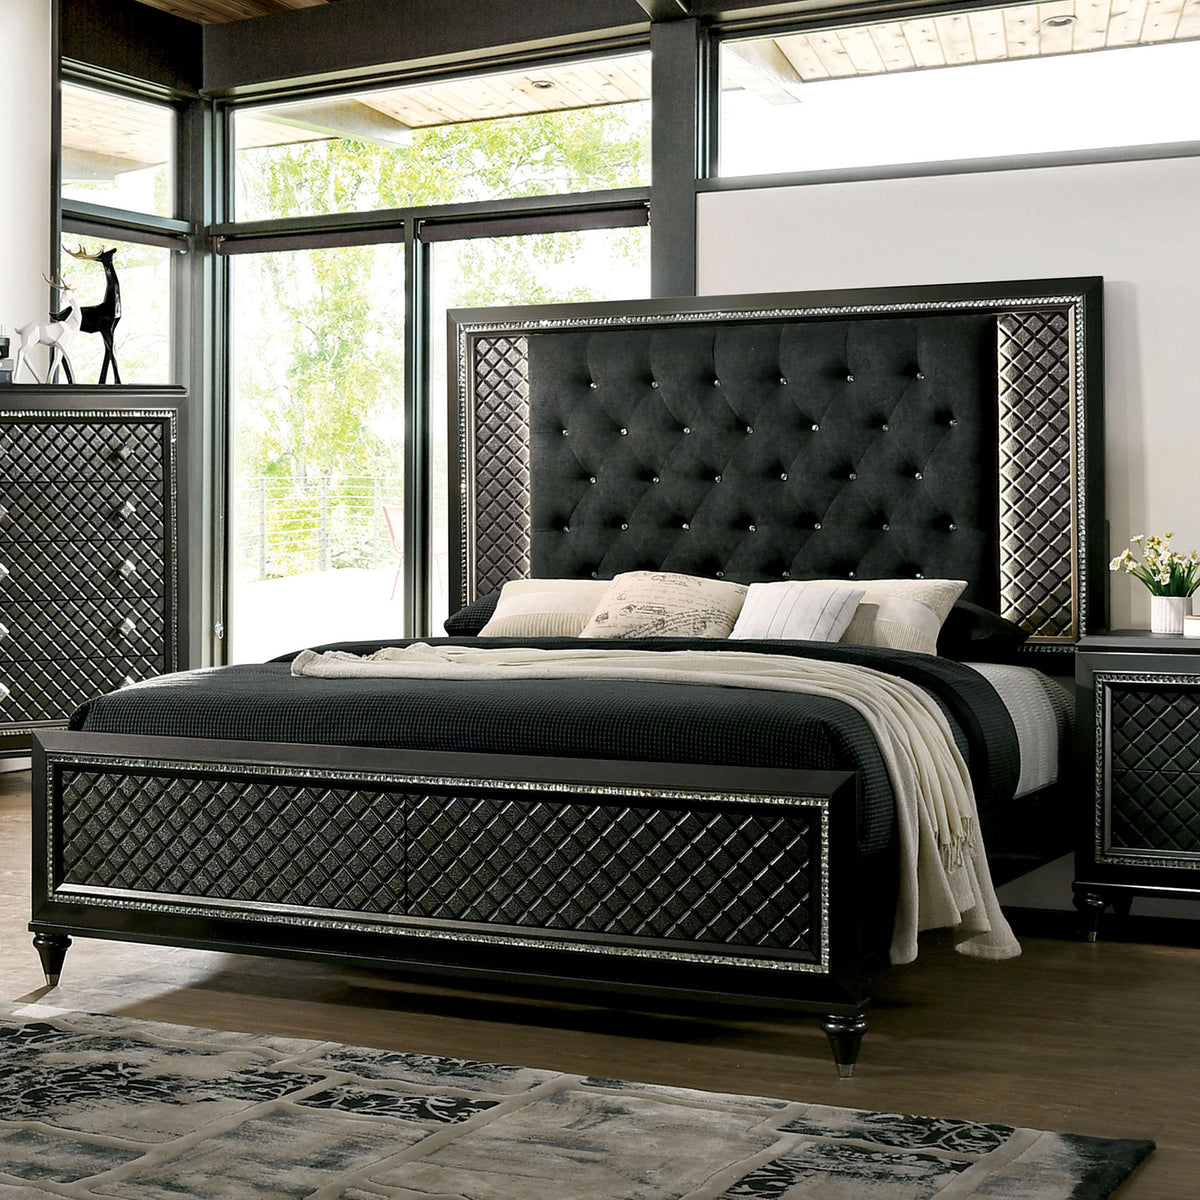 Demetria Metallic Gray E.King Bed Demetria Metallic Gray E.King Bed Half Price Furniture